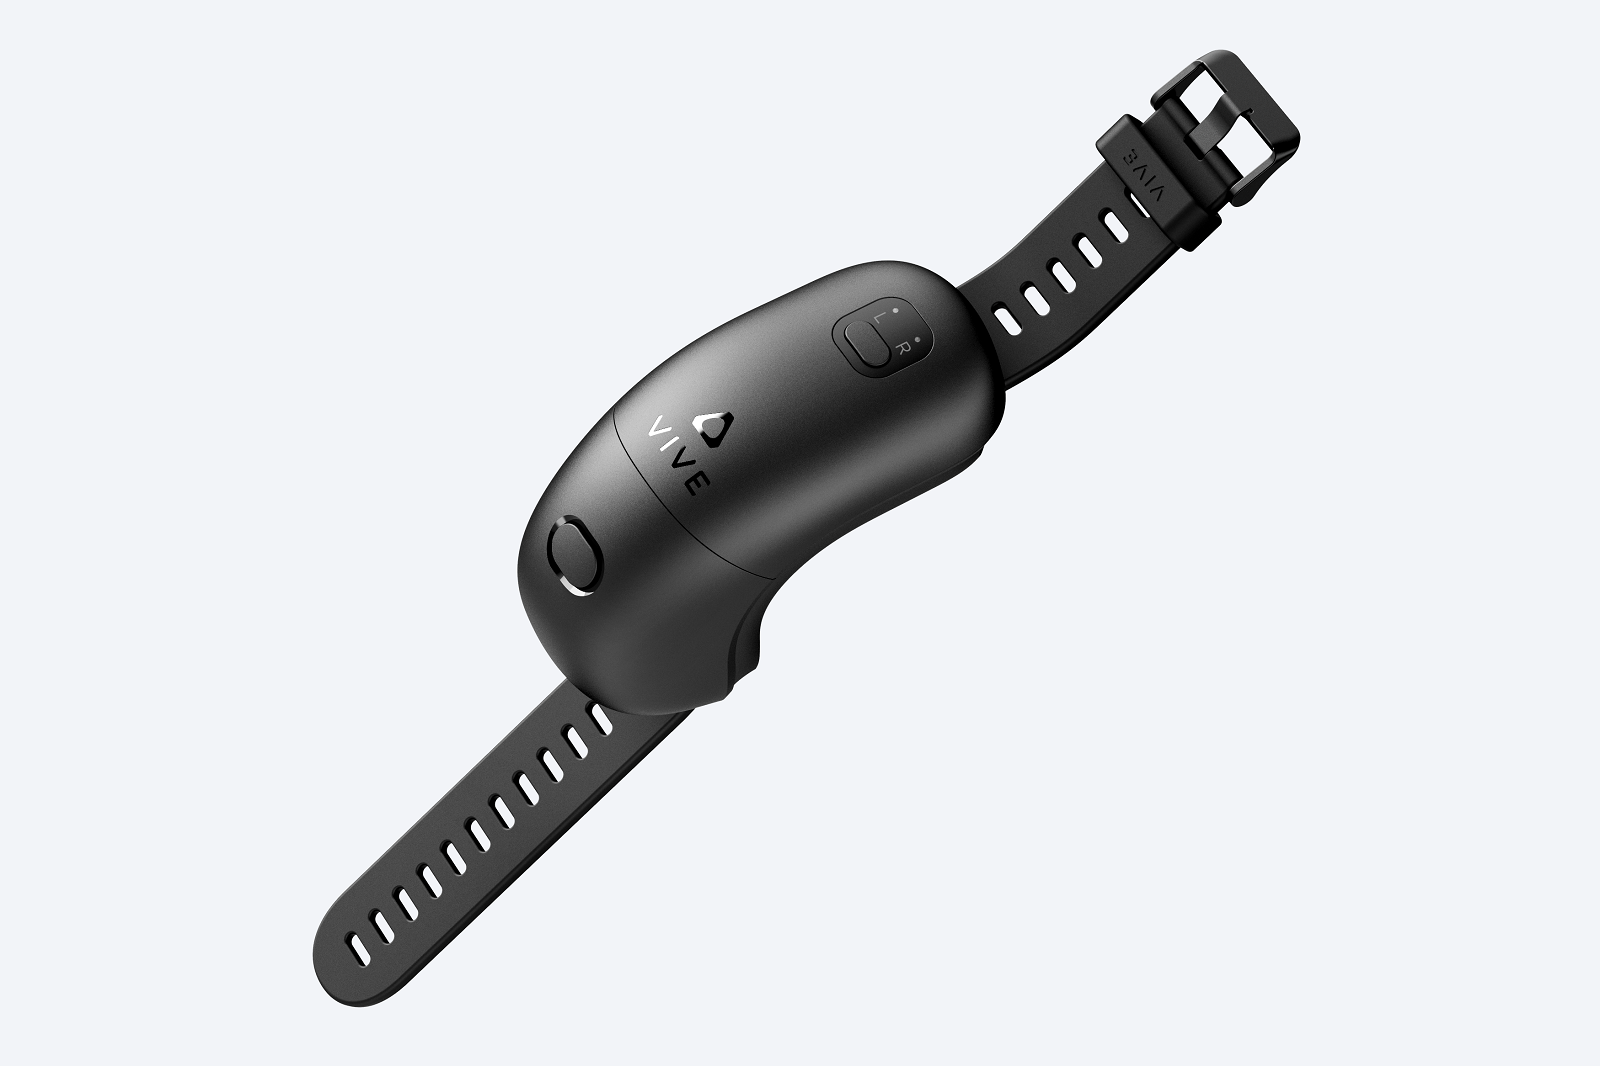 HTC Vive wrist tracker photo 2